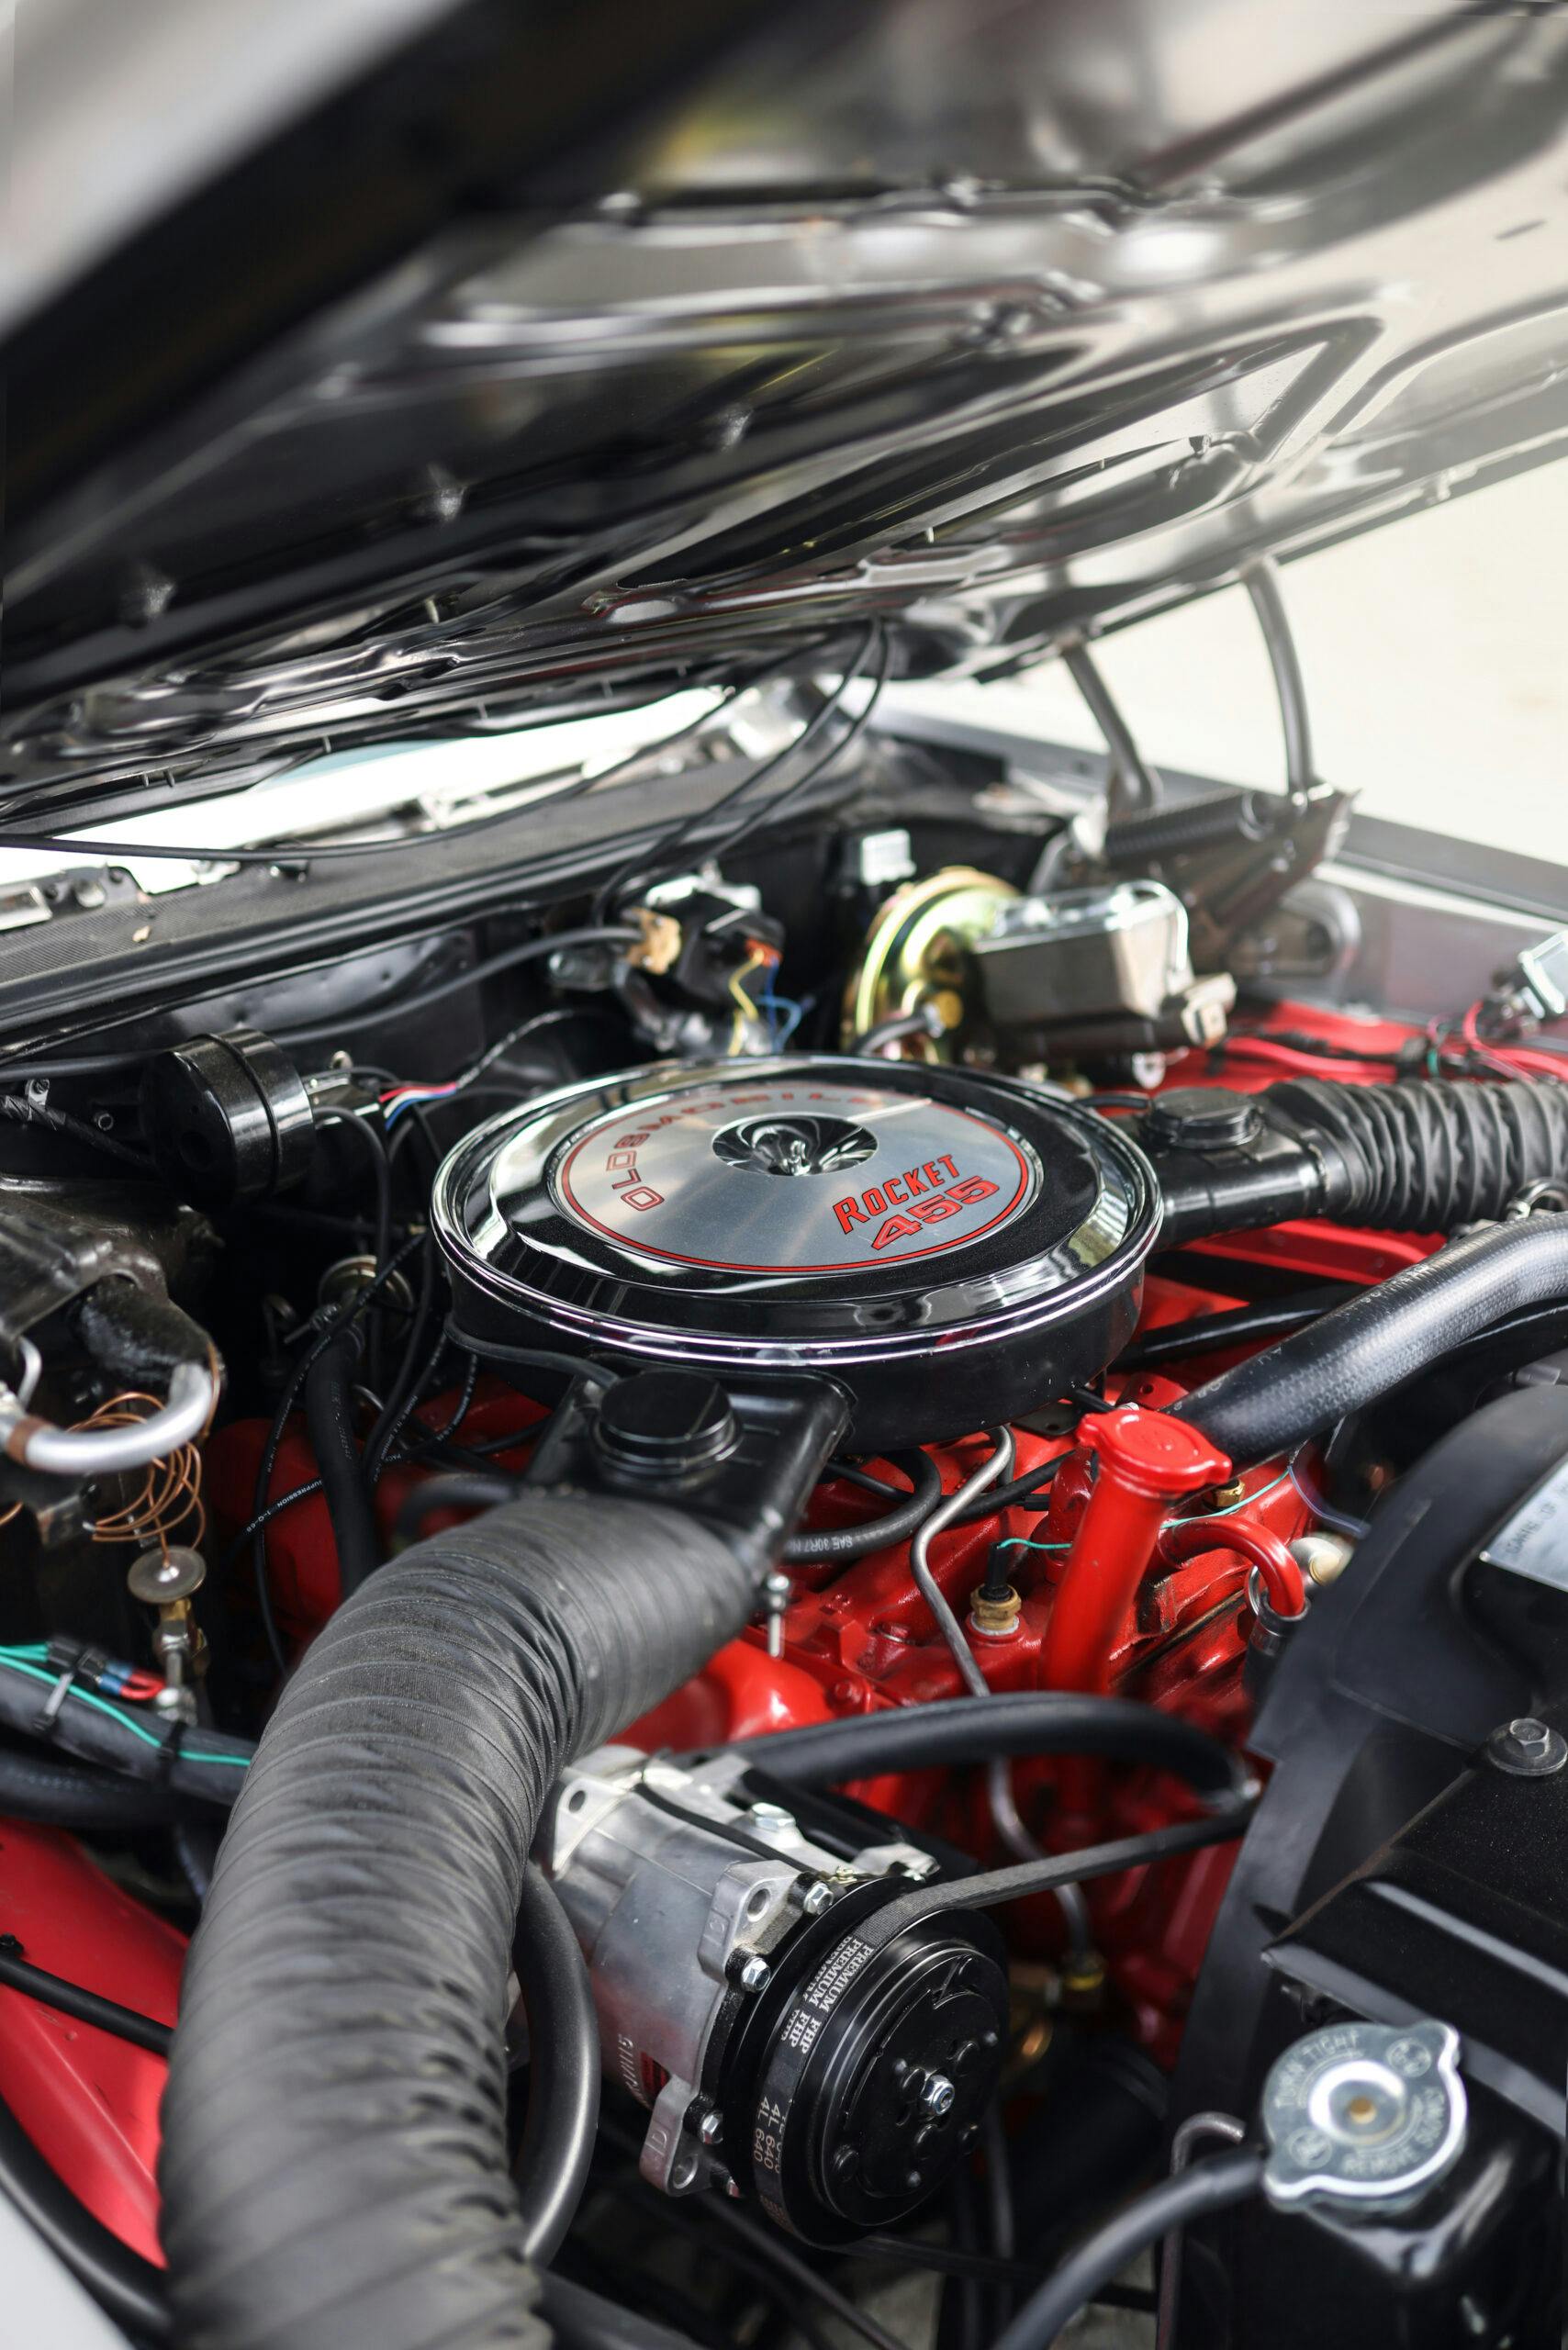 1968 Hurst Oldsmobile engine vertical